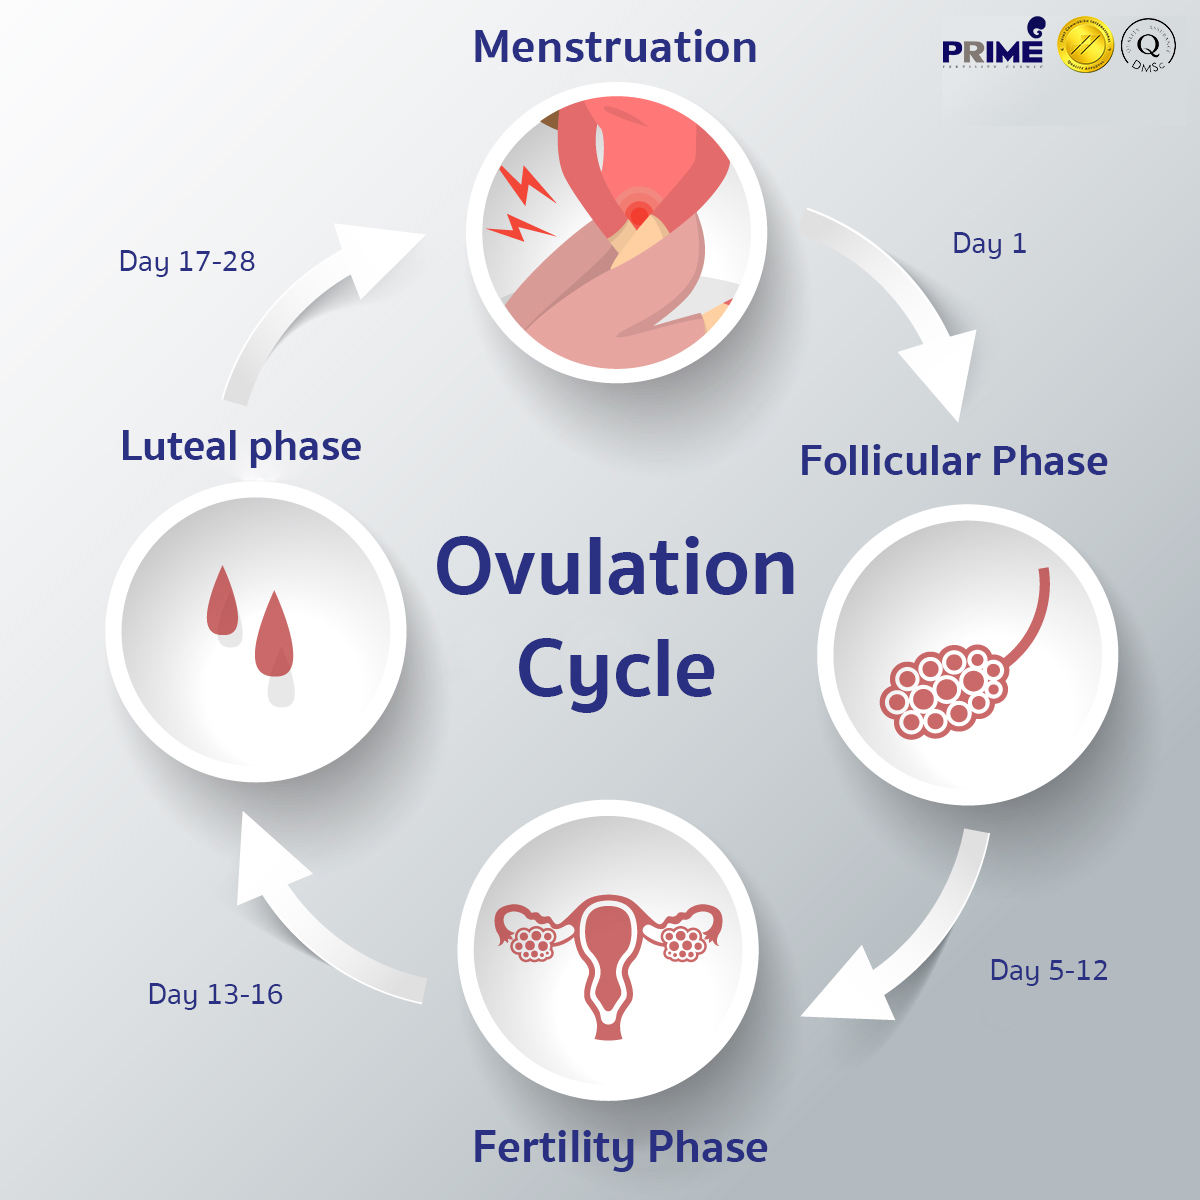 plan b 4 days before ovulation